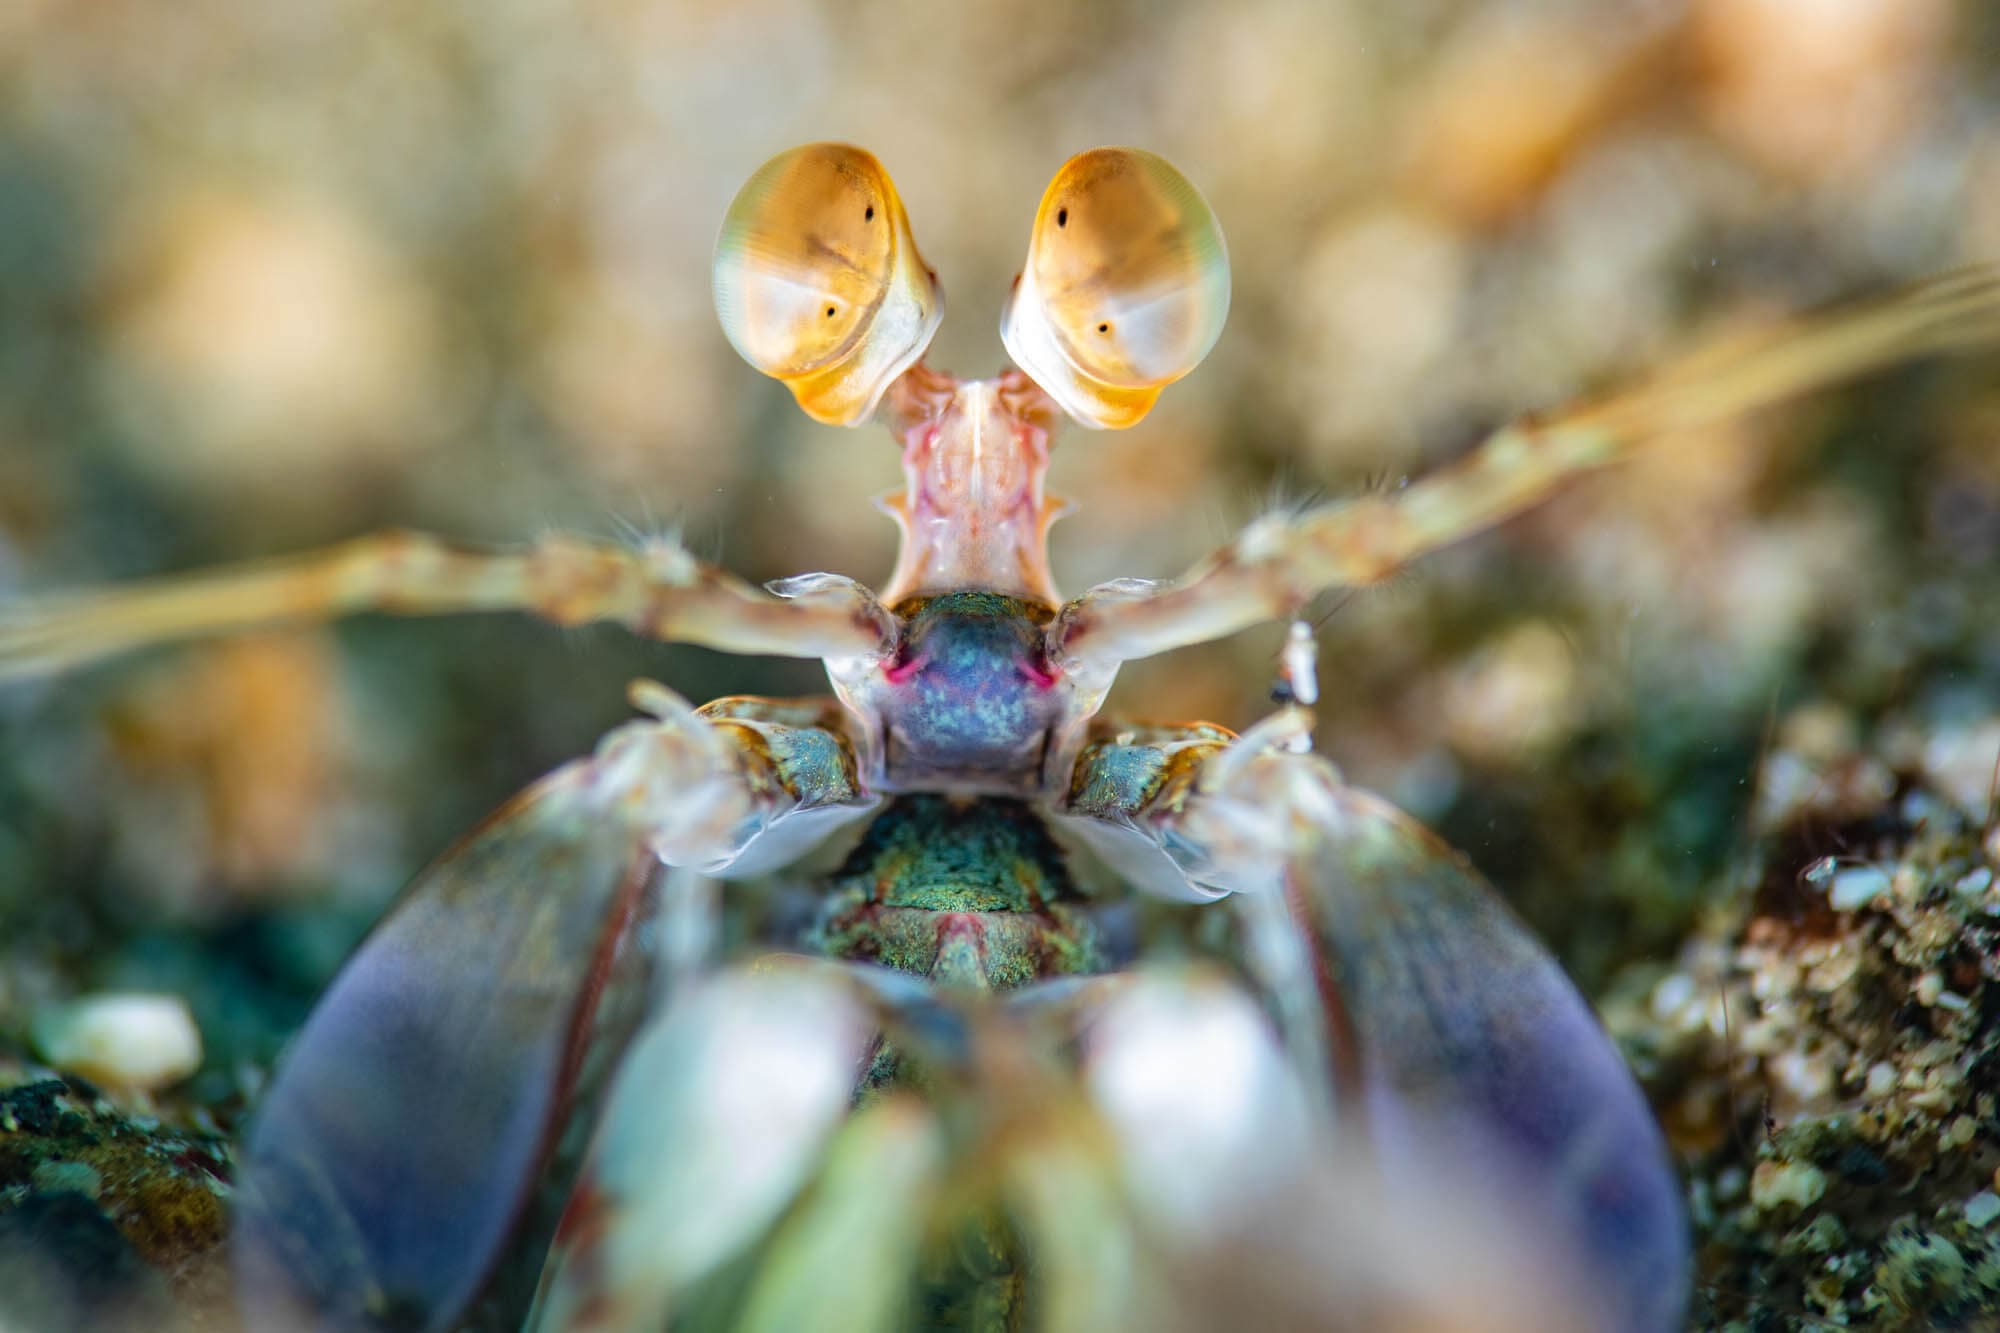 Pink-eared mantis shrimp by Saeed Rashid